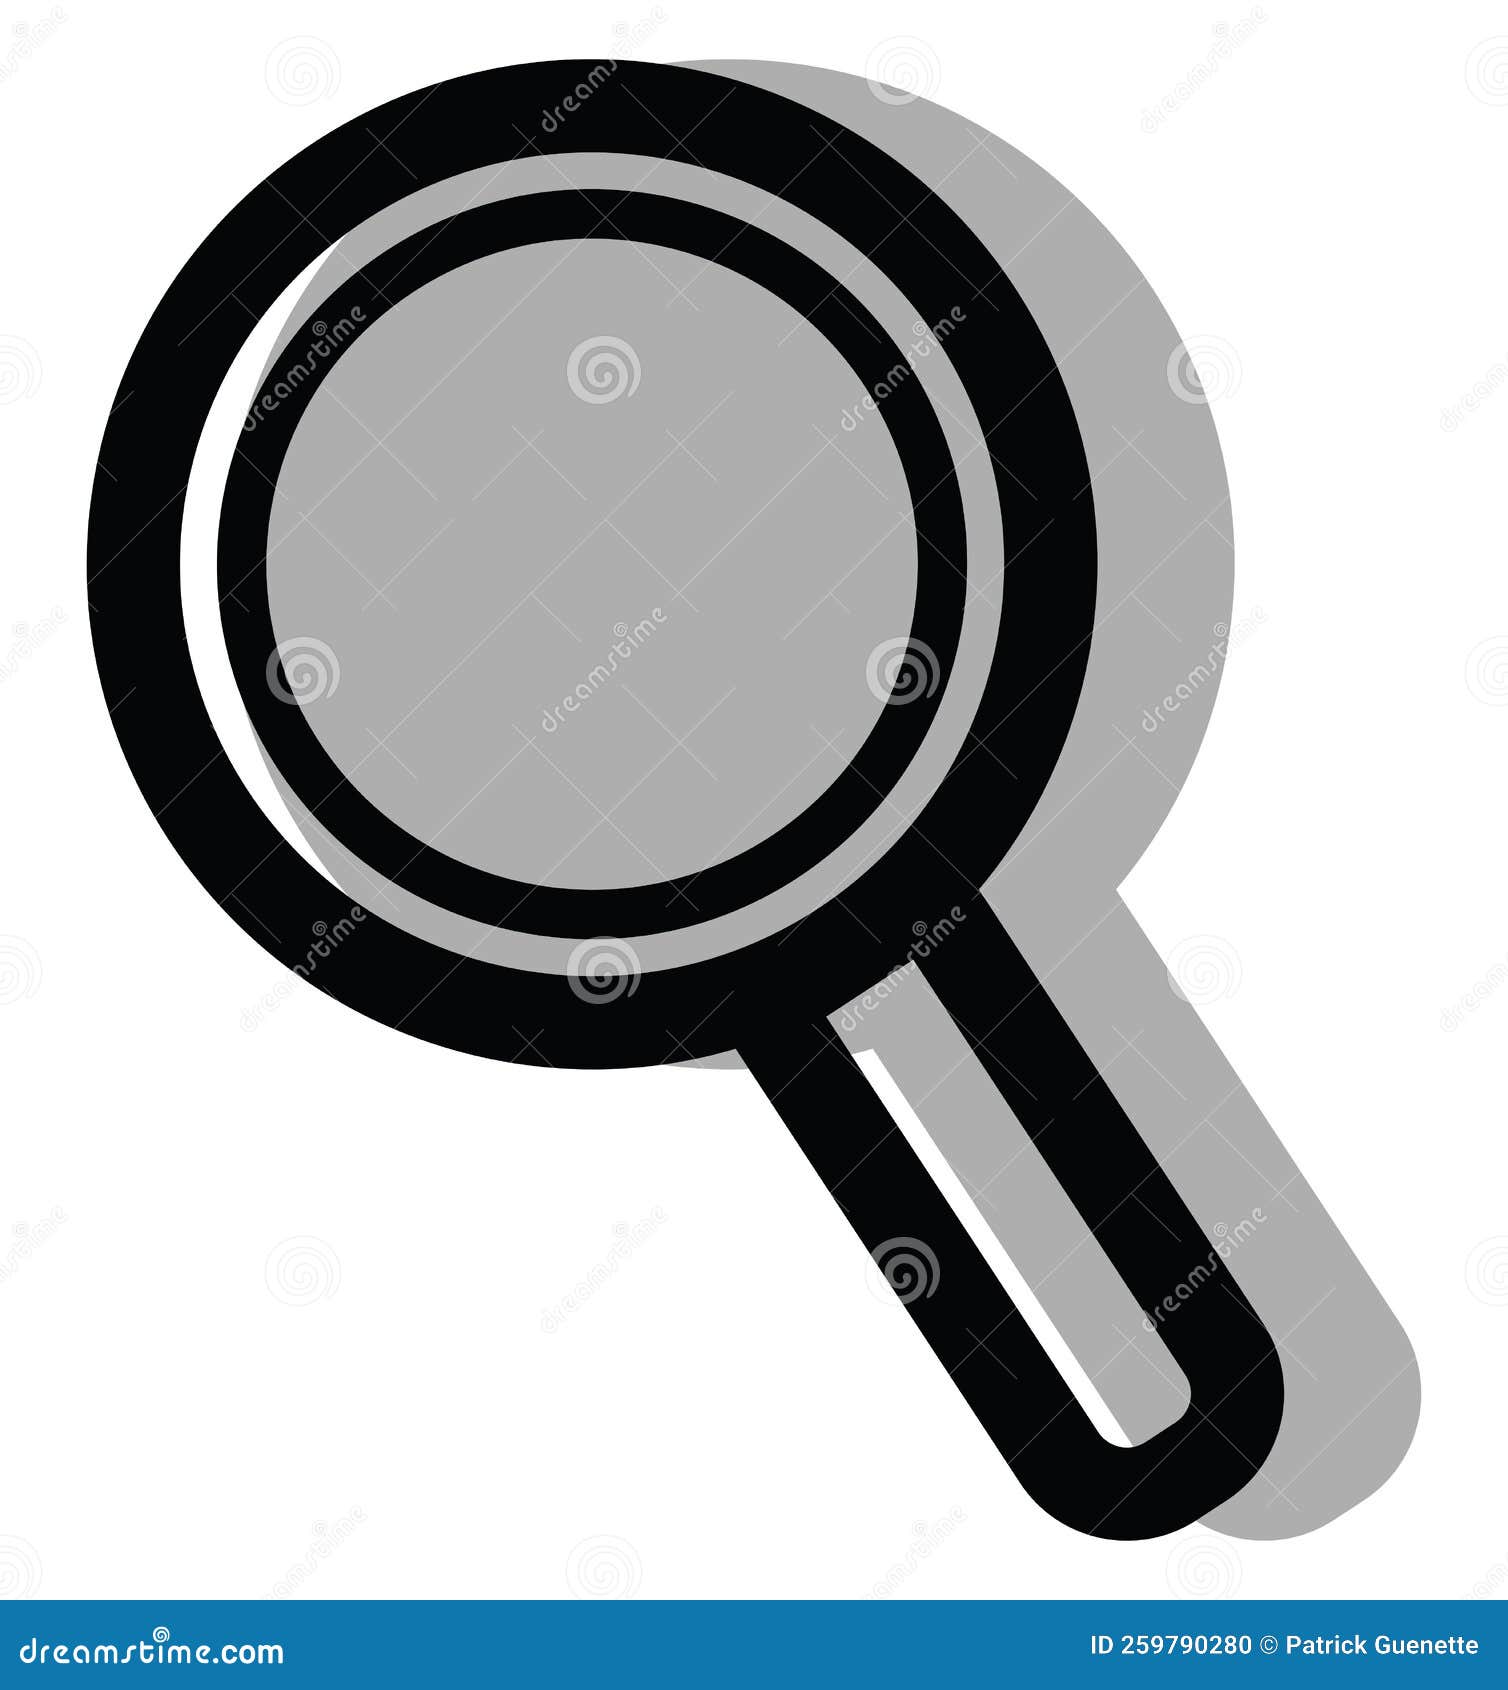 Grey magnifier, icon stock vector. Illustration of medicine - 259790280